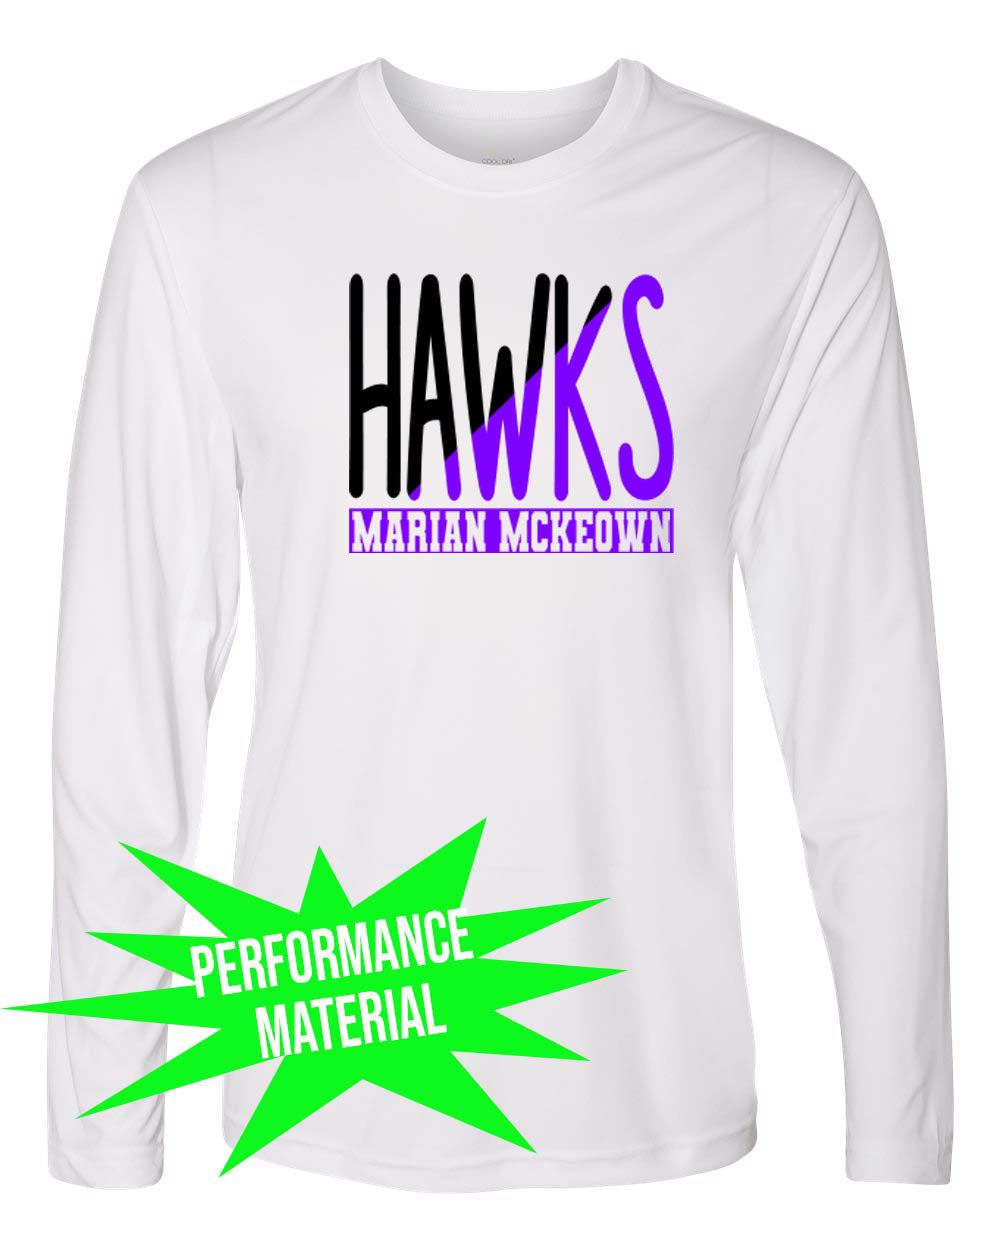 McKeown Performance Material Design 15 Long Sleeve Shirt